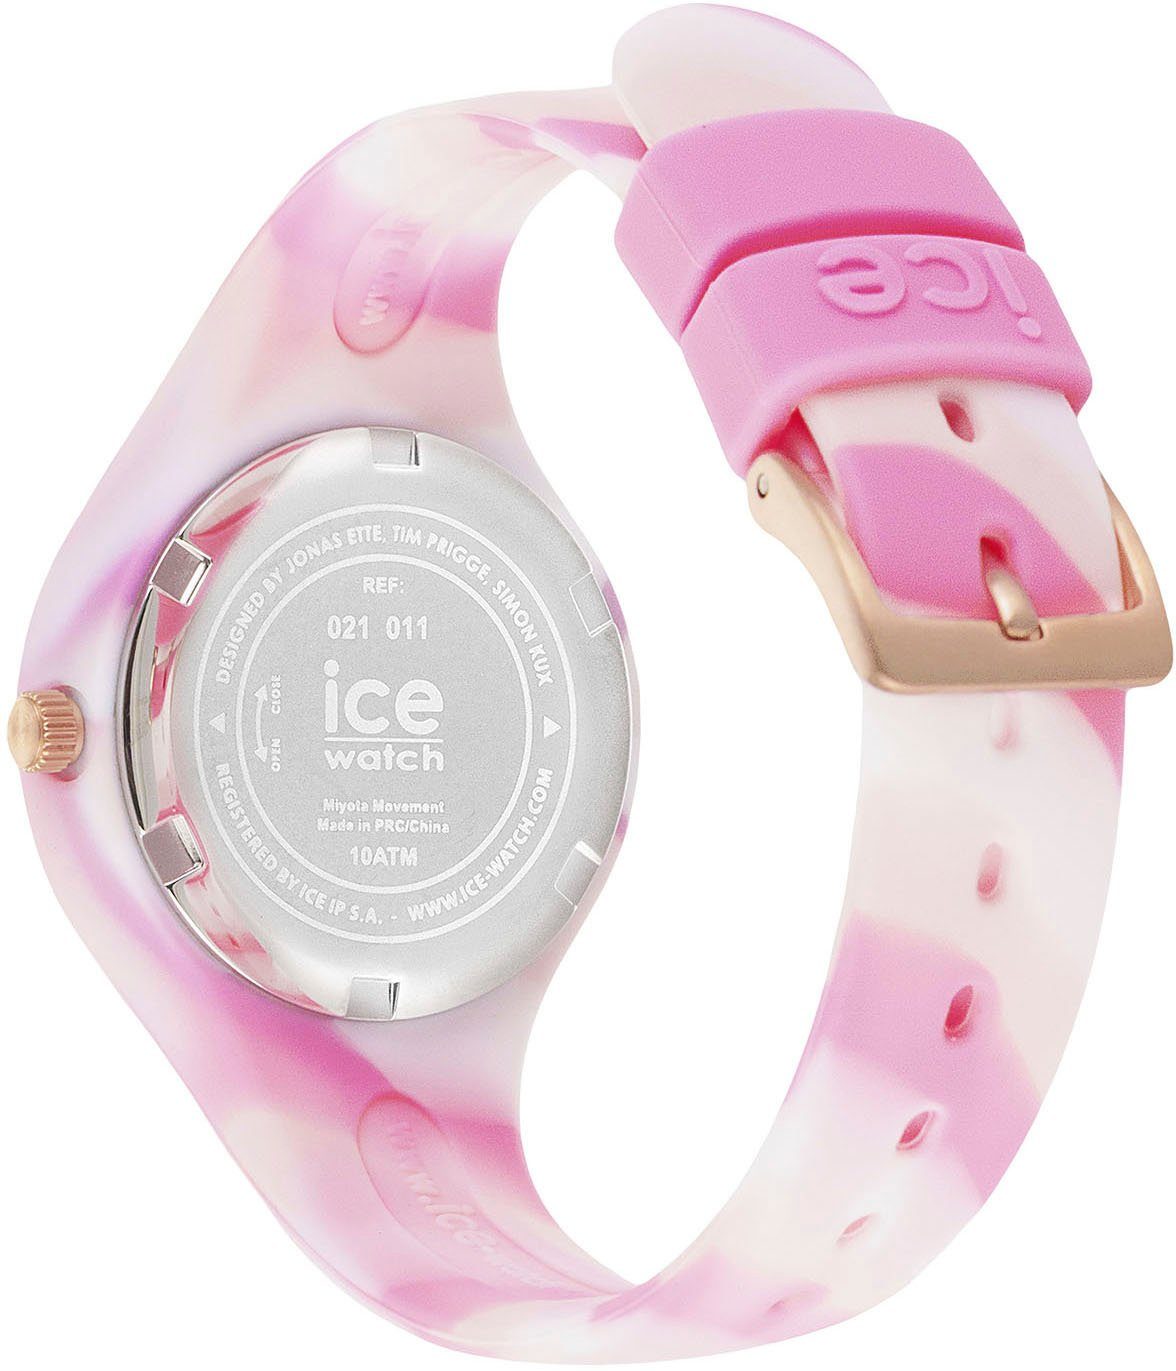 ice-watch Quarzuhr ICE tie and als dye 021011, Geschenk - - shades ideal Extra-Small 3H, - Pink auch